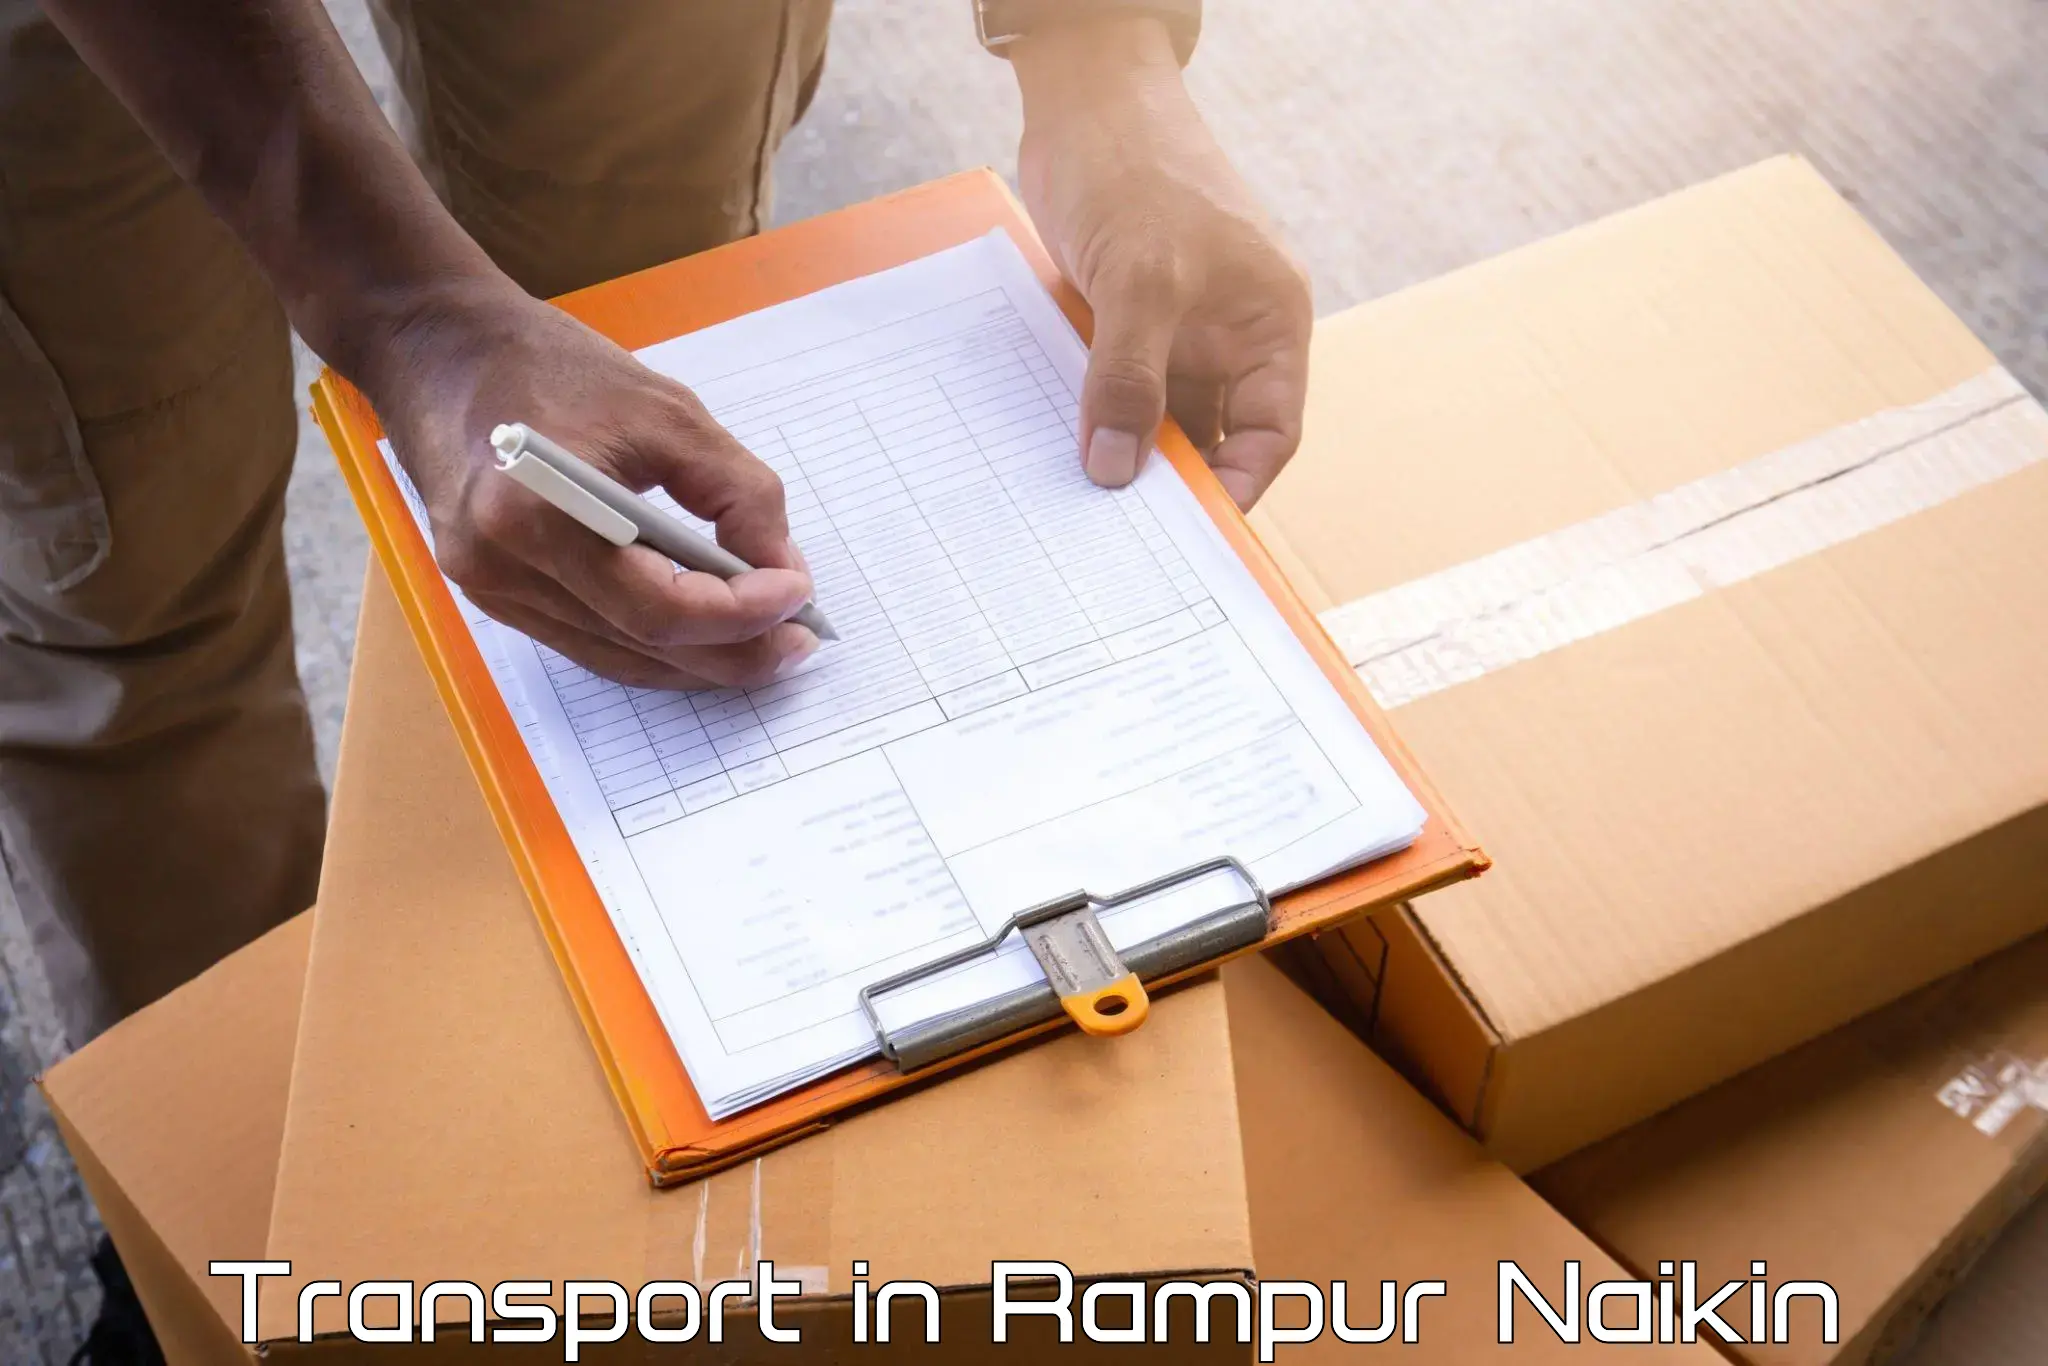 Cargo train transport services in Rampur Naikin